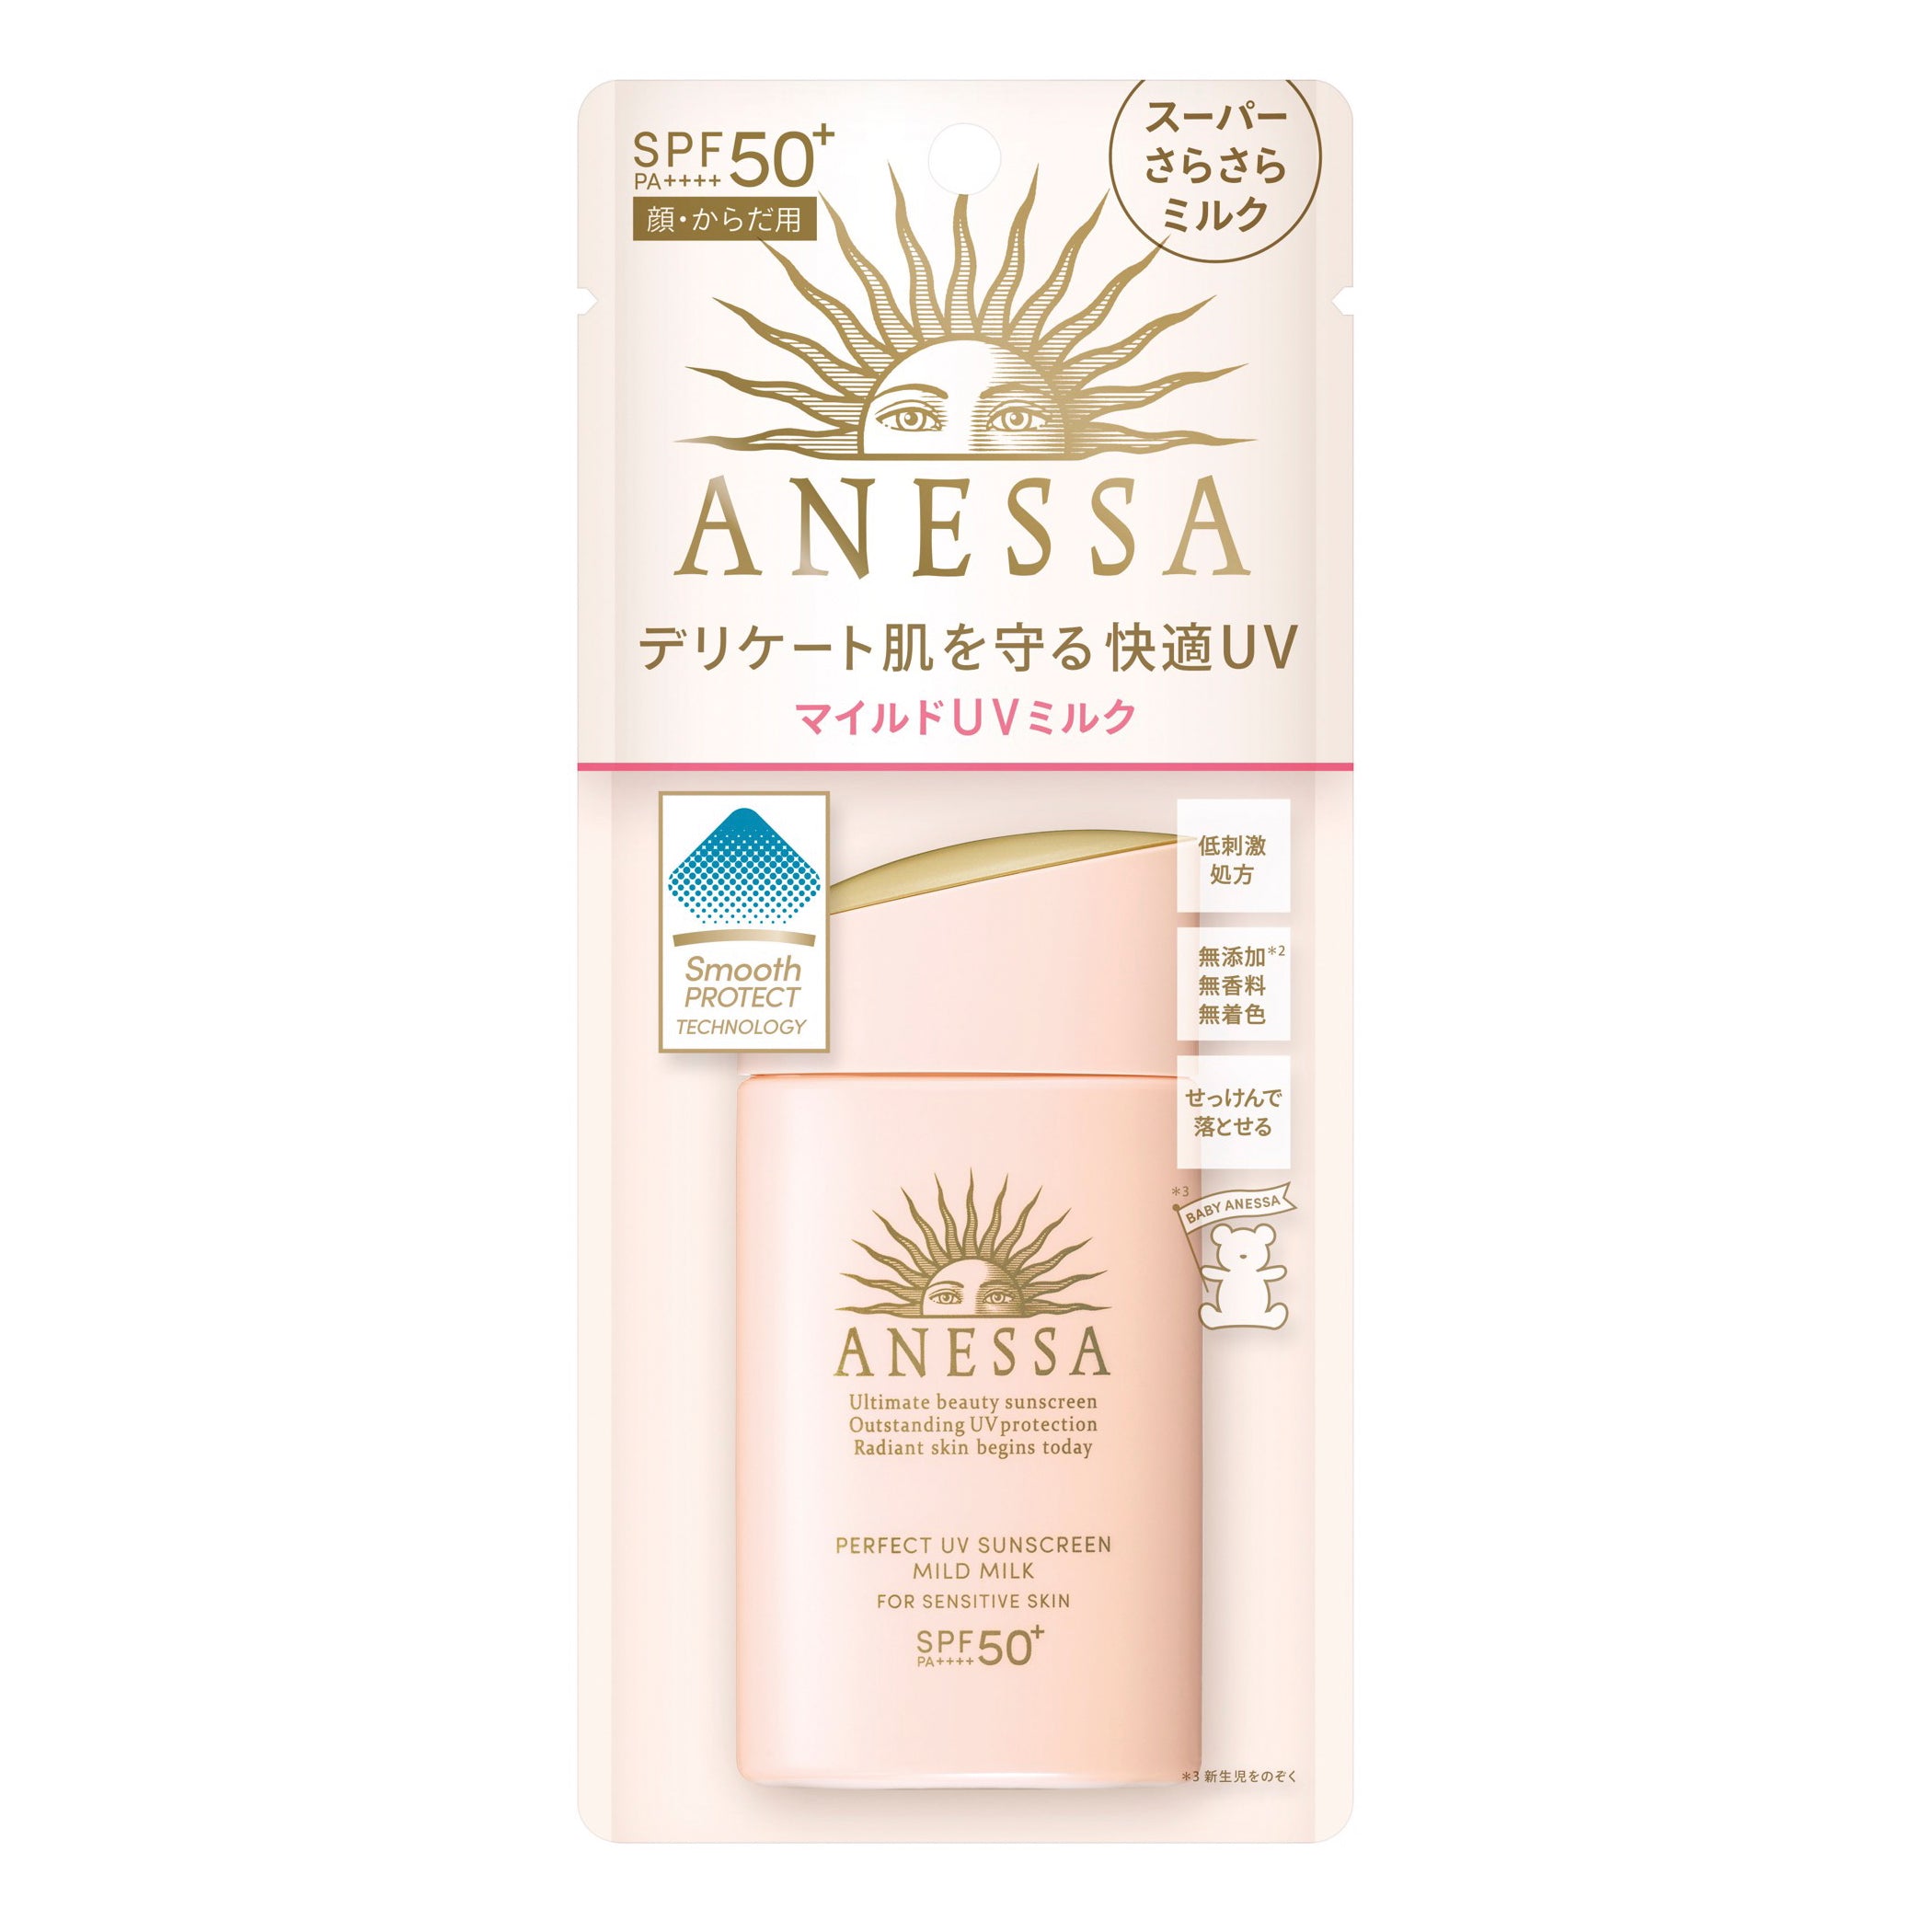 Anessa Perfect UV Sunscreen Mild Milk SPF50+ Beauty Shiseido   